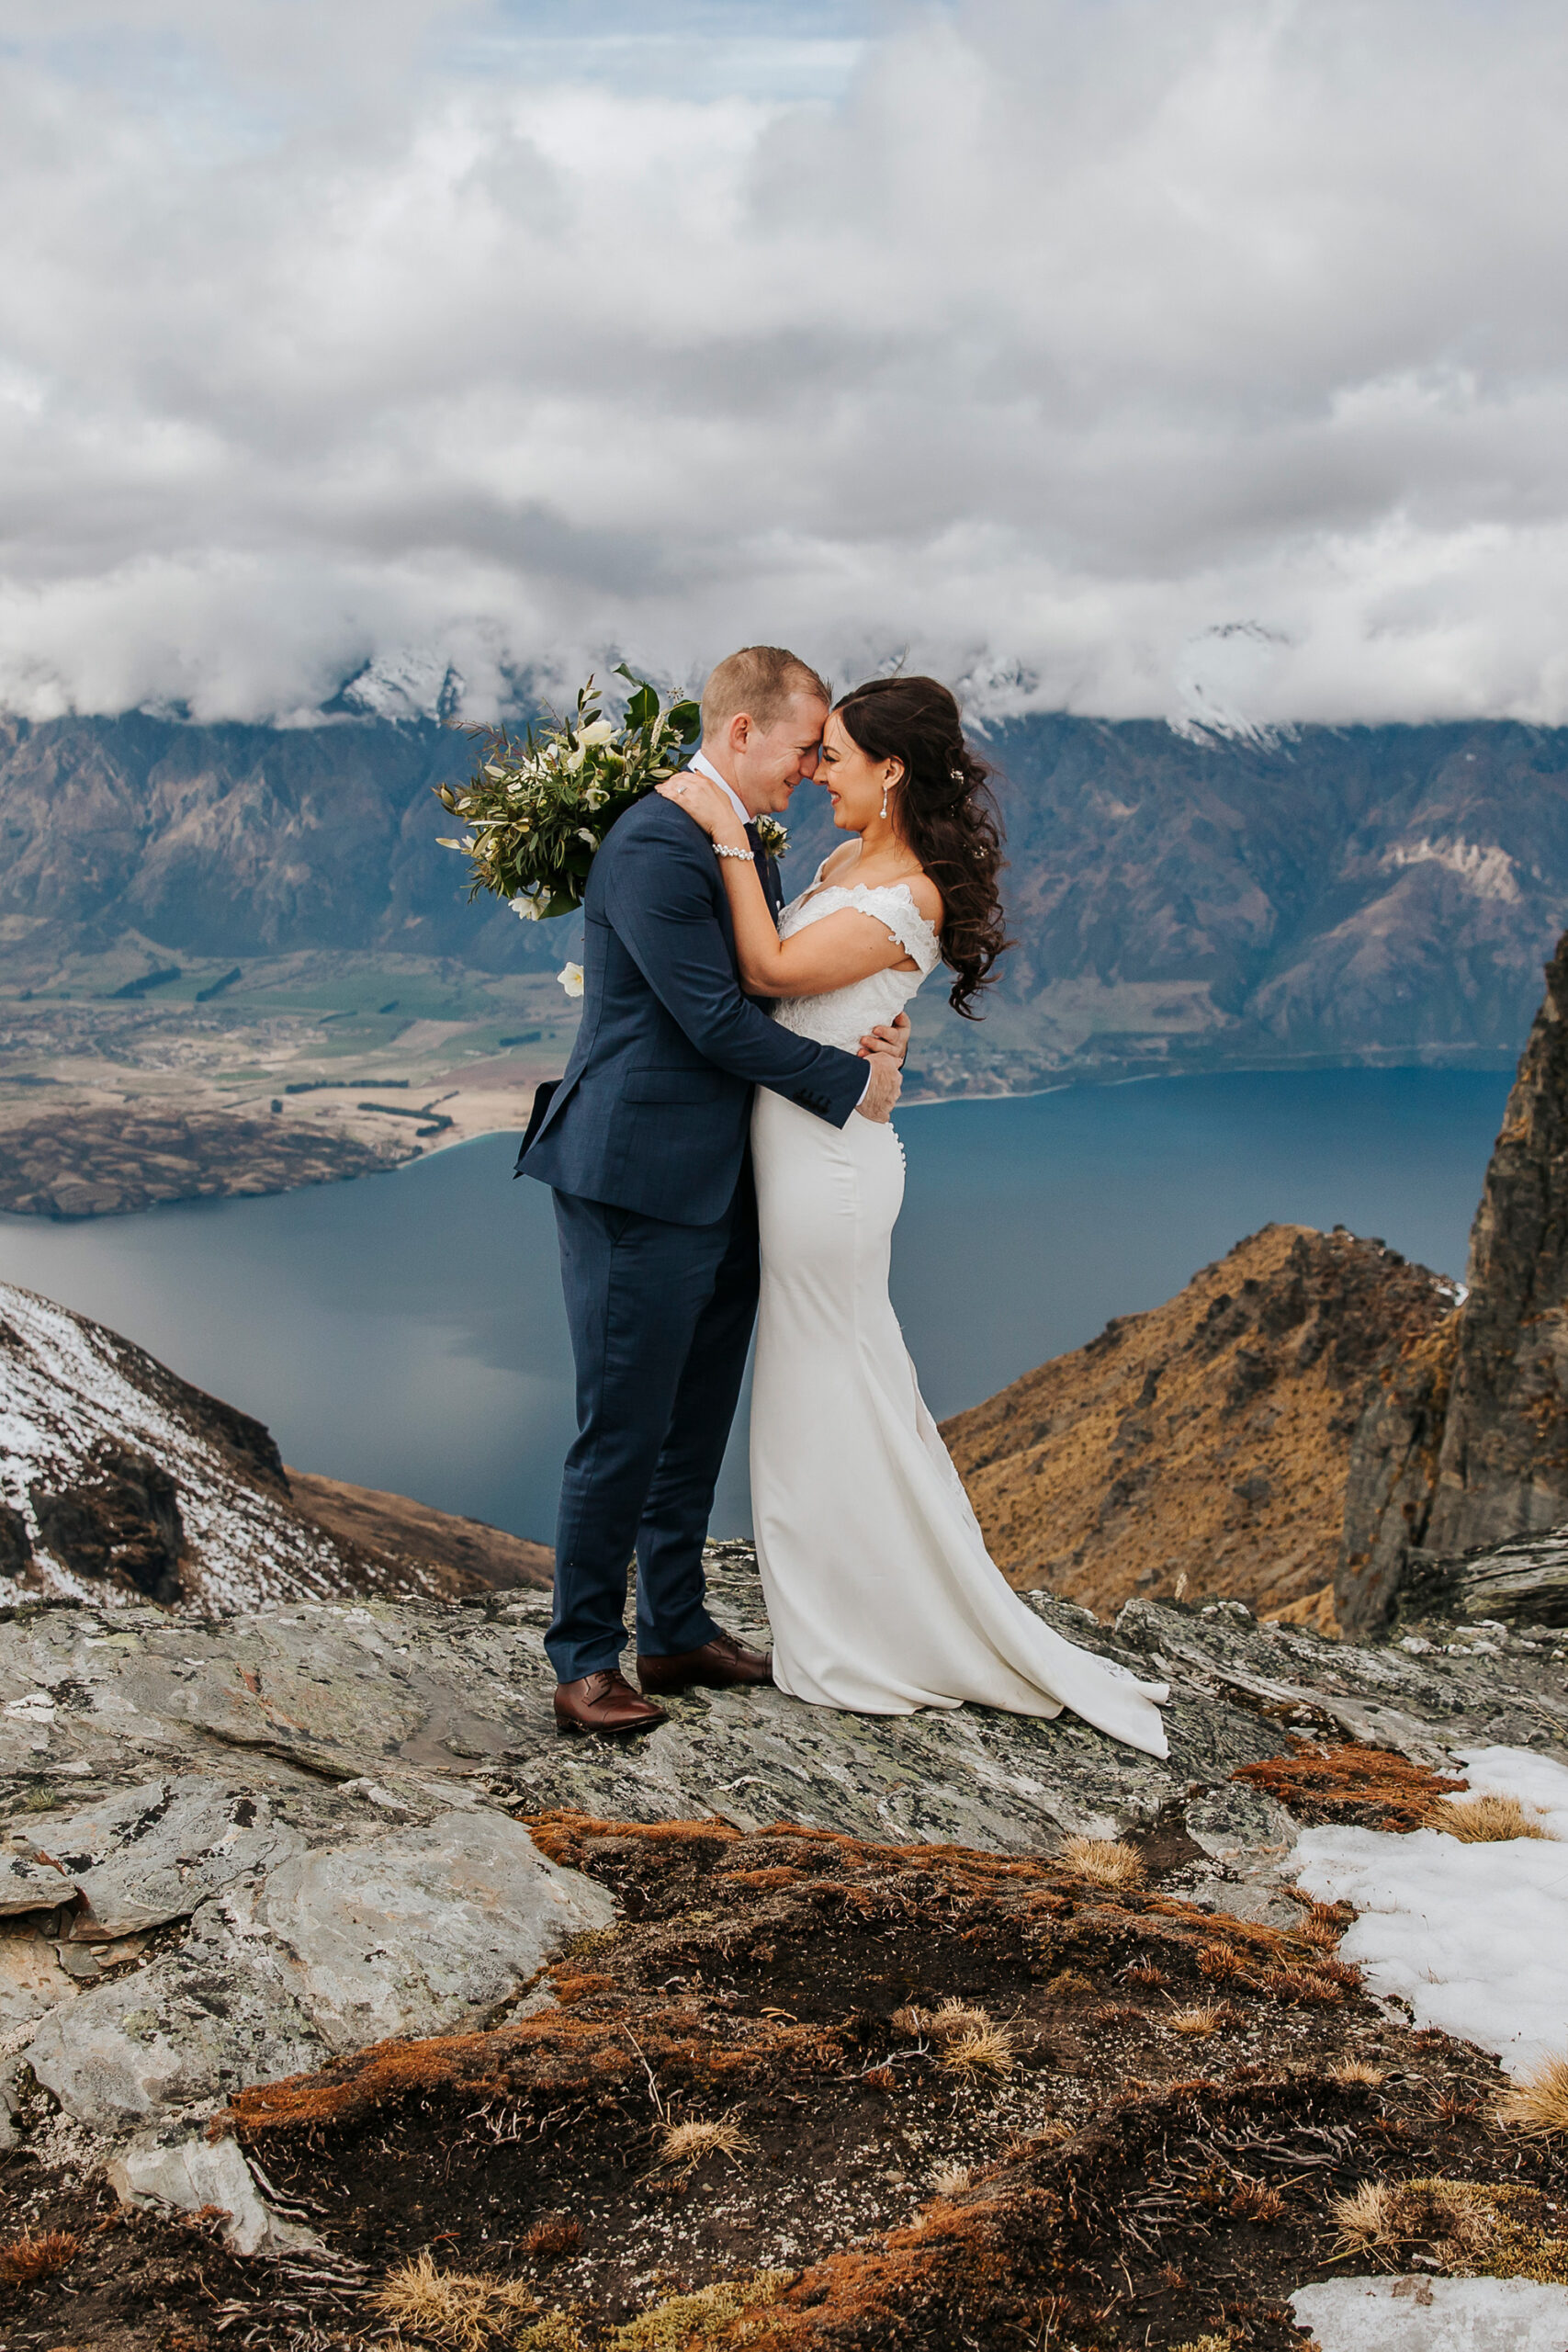 Melissa_Gareth_New-Zealand-Elopement_Larsson-Weddings_Angus-White-Photography_SBS_002